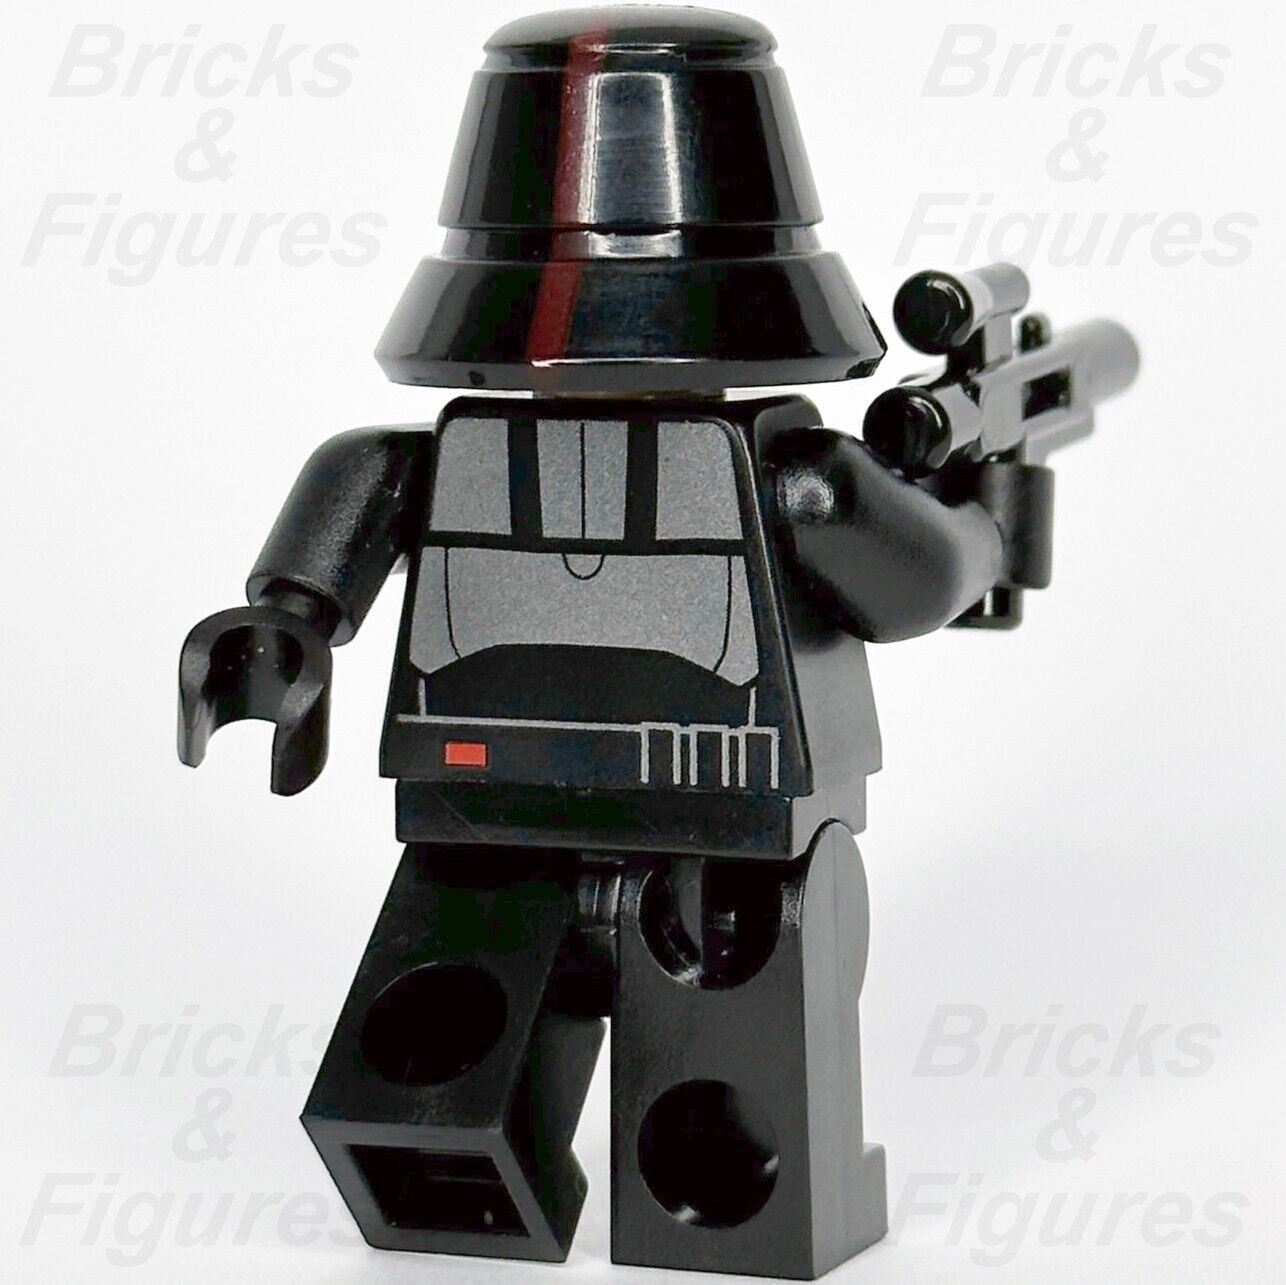 LEGO Star Wars Sith Trooper Minifigure The Old Republic 9500 sw0414 Minifig - Bricks & Figures